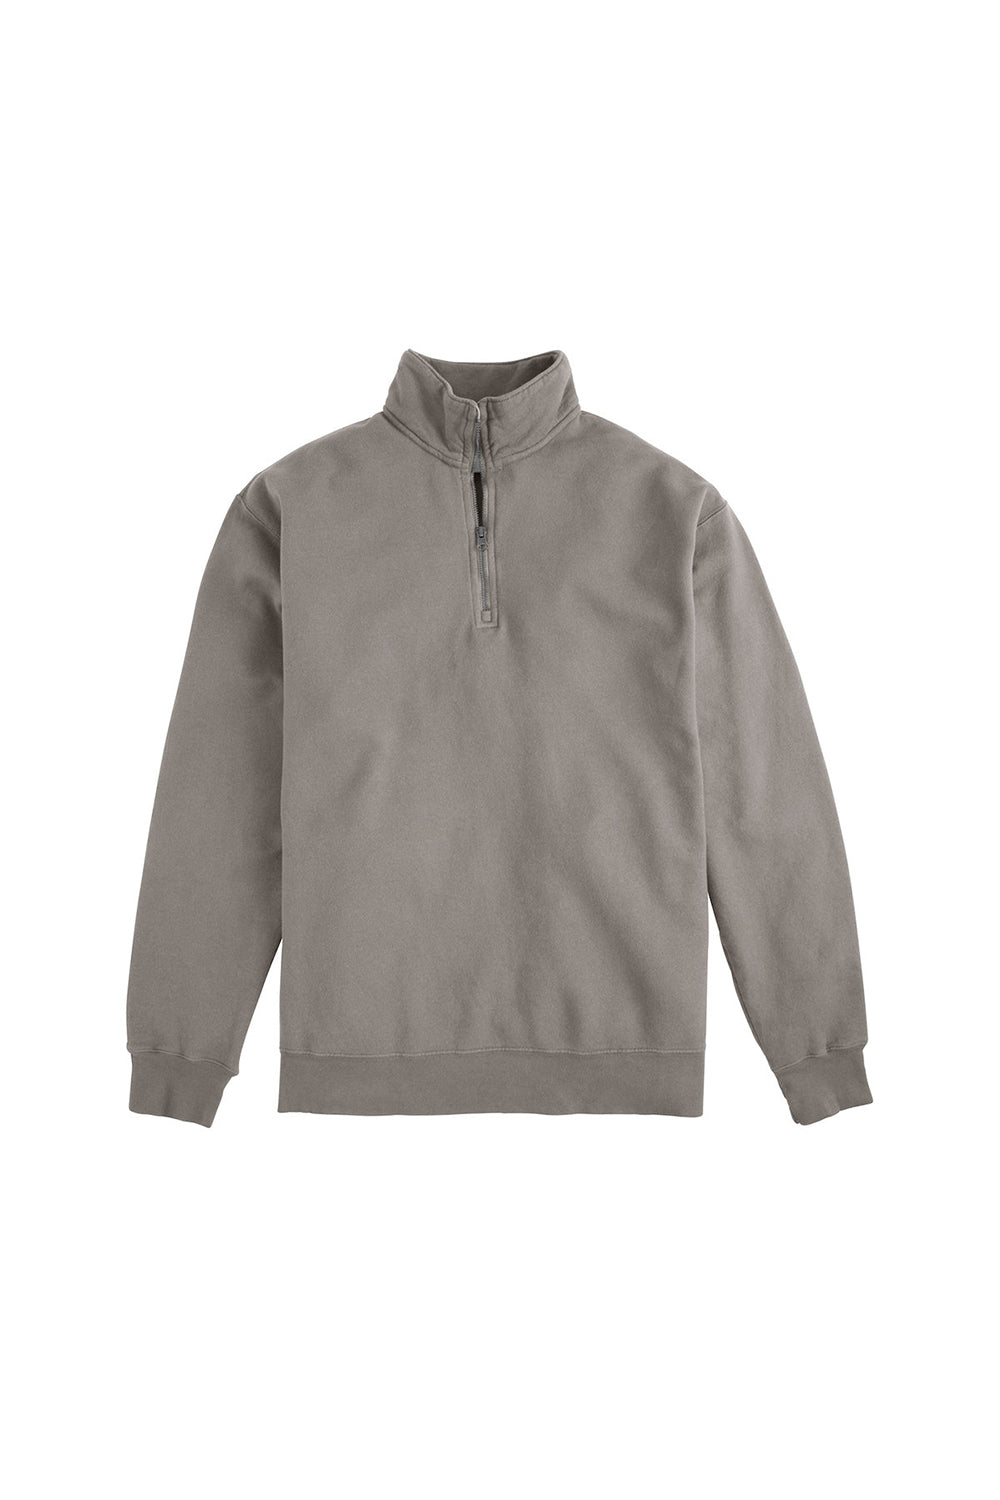 ComfortWash by Hanes GDH425 Mens 1/4 Zip Sweatshirt Concrete Grey Flat Front